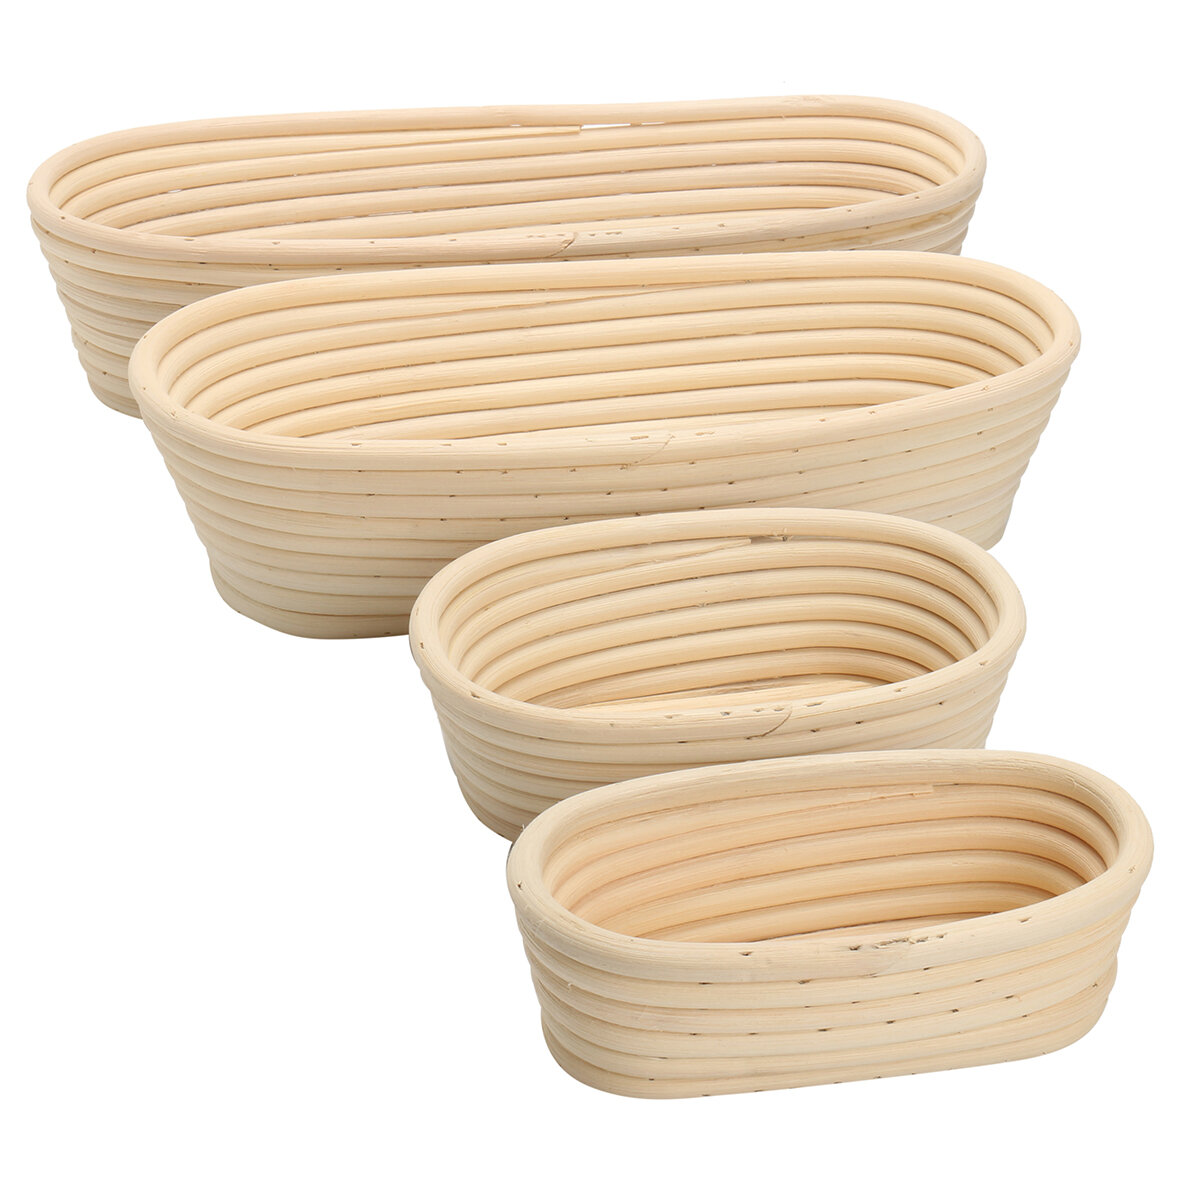 Long Oval Banneton Bread Dough Proofing Rattan Brotform Storage Baskets Loaf Proving Rising 4 Sizes Sale Banggood Com,Grilled Salmon Recipe